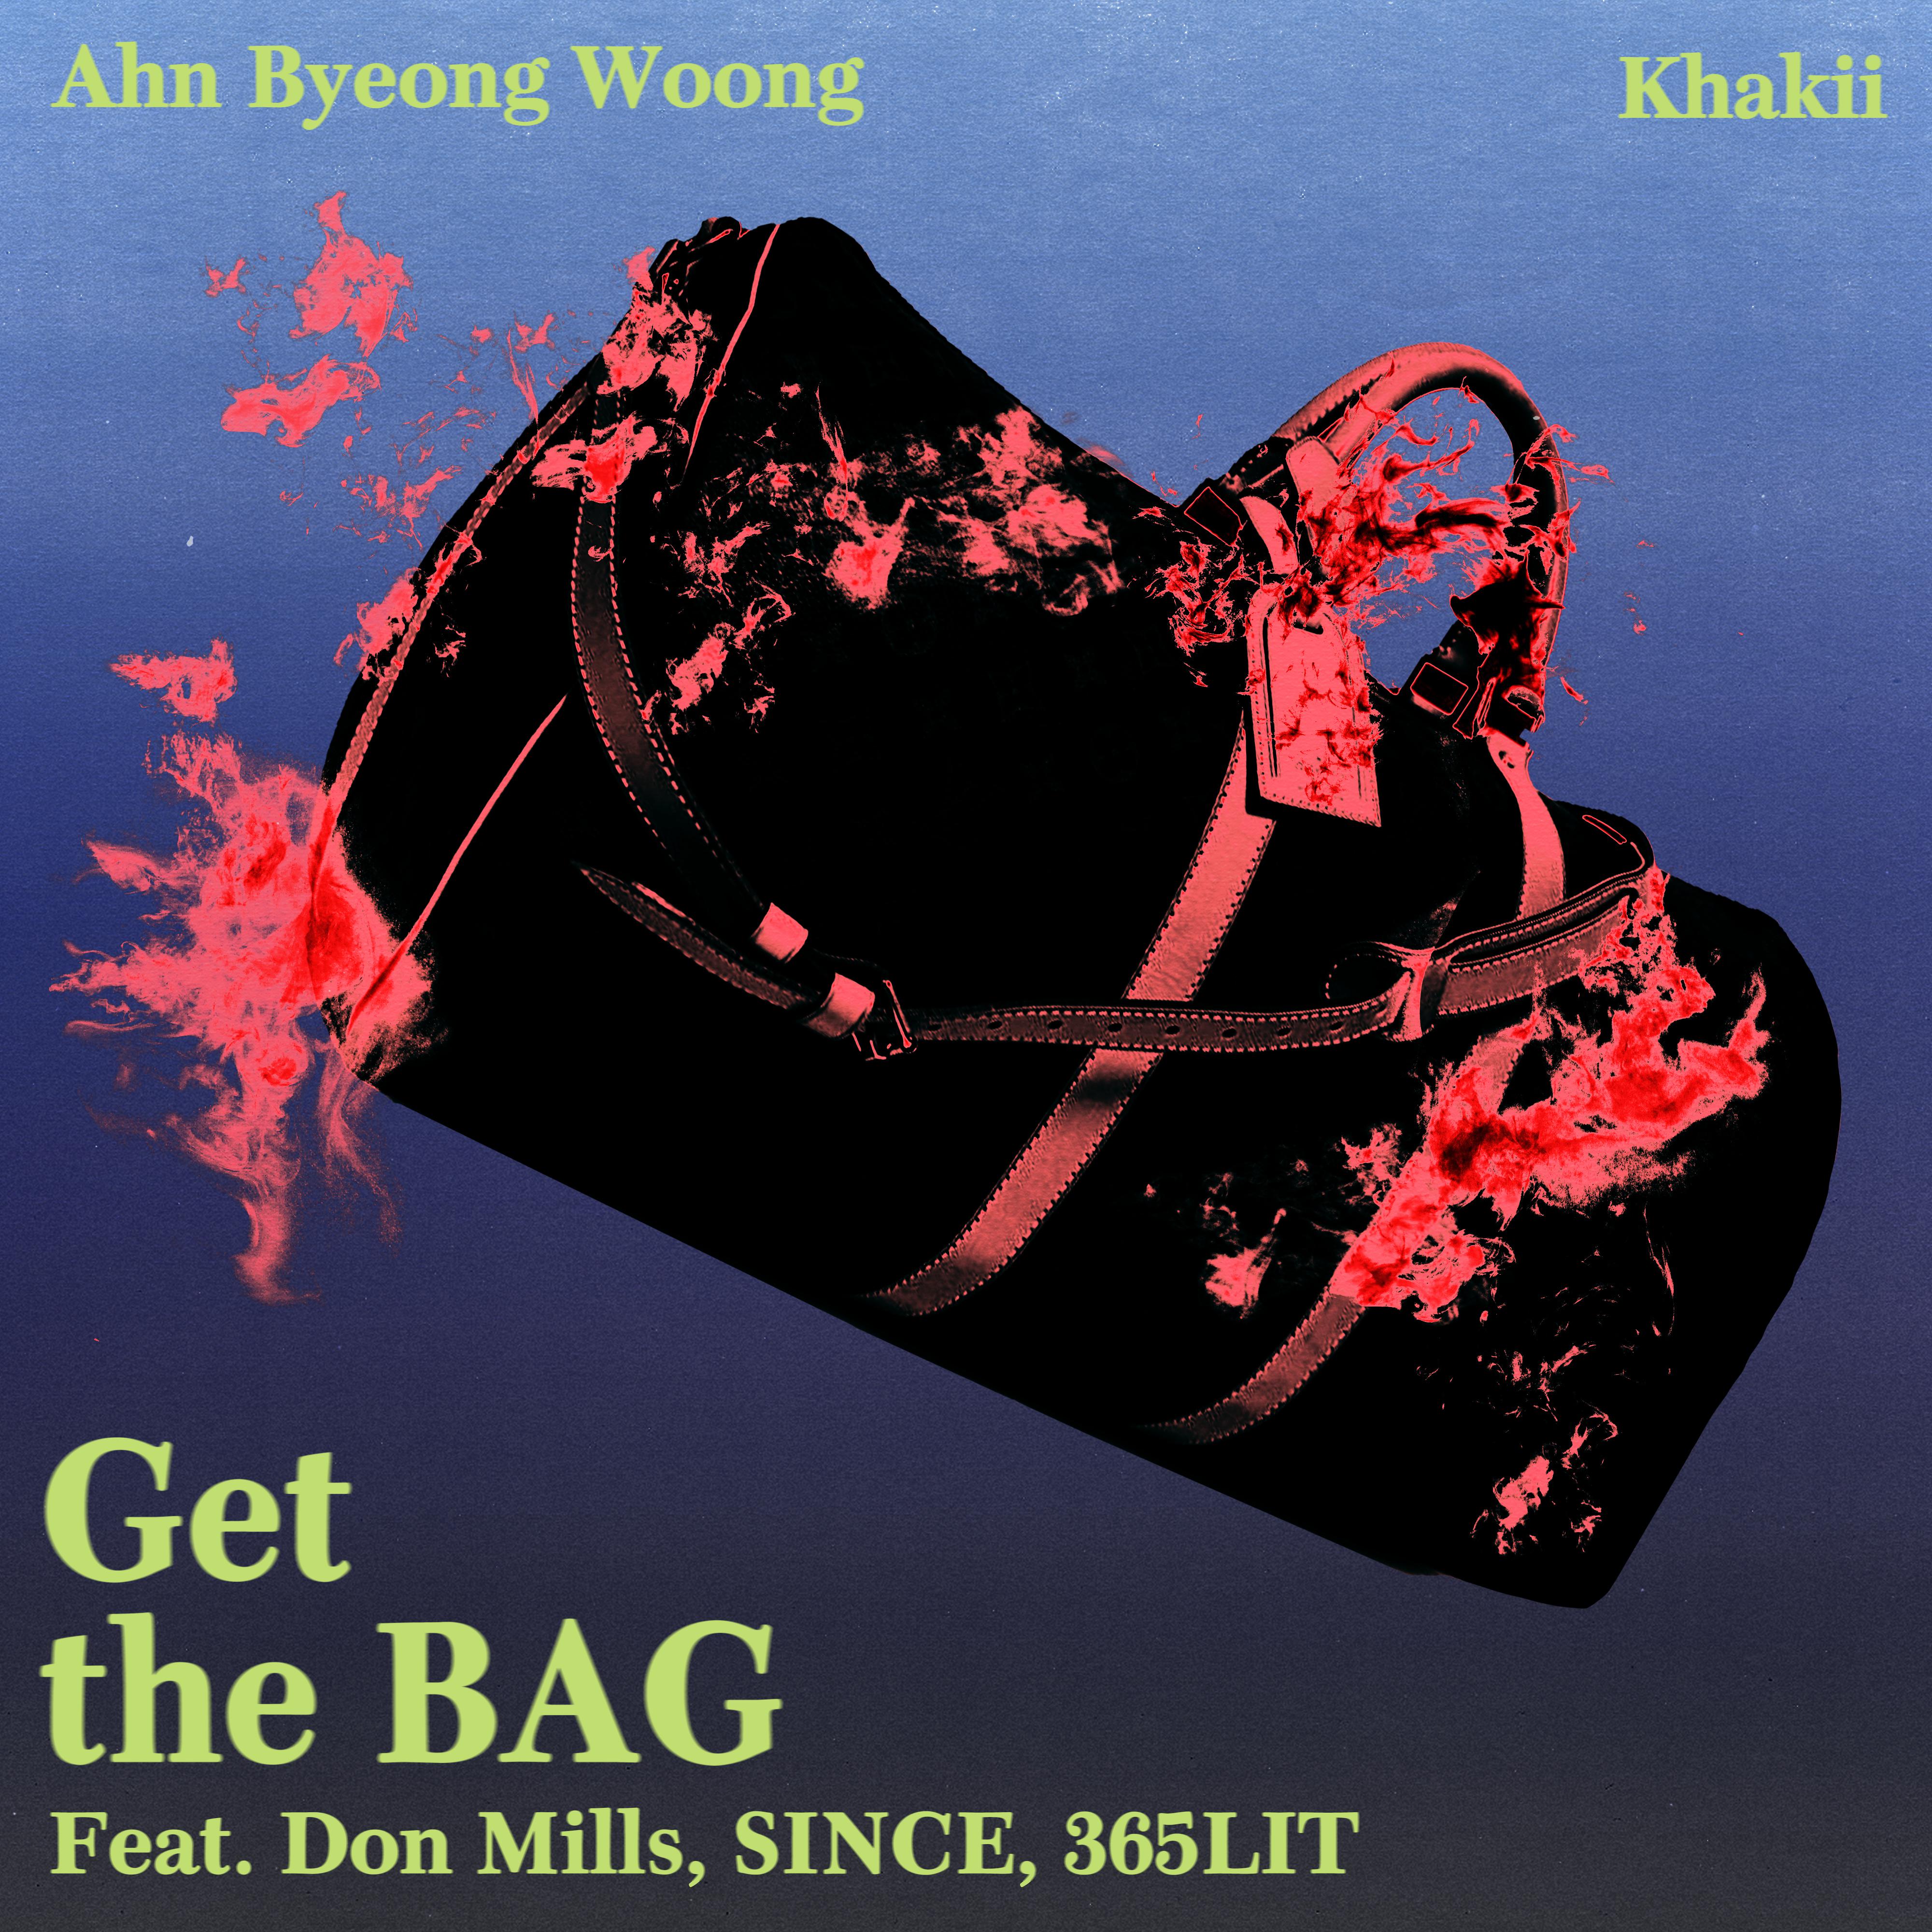 Get the Bag歌词 歌手安炳雄 / Khakii / Don Mills / SINCE / 365lit-专辑Get the Bag-单曲《Get the Bag》LRC歌词下载